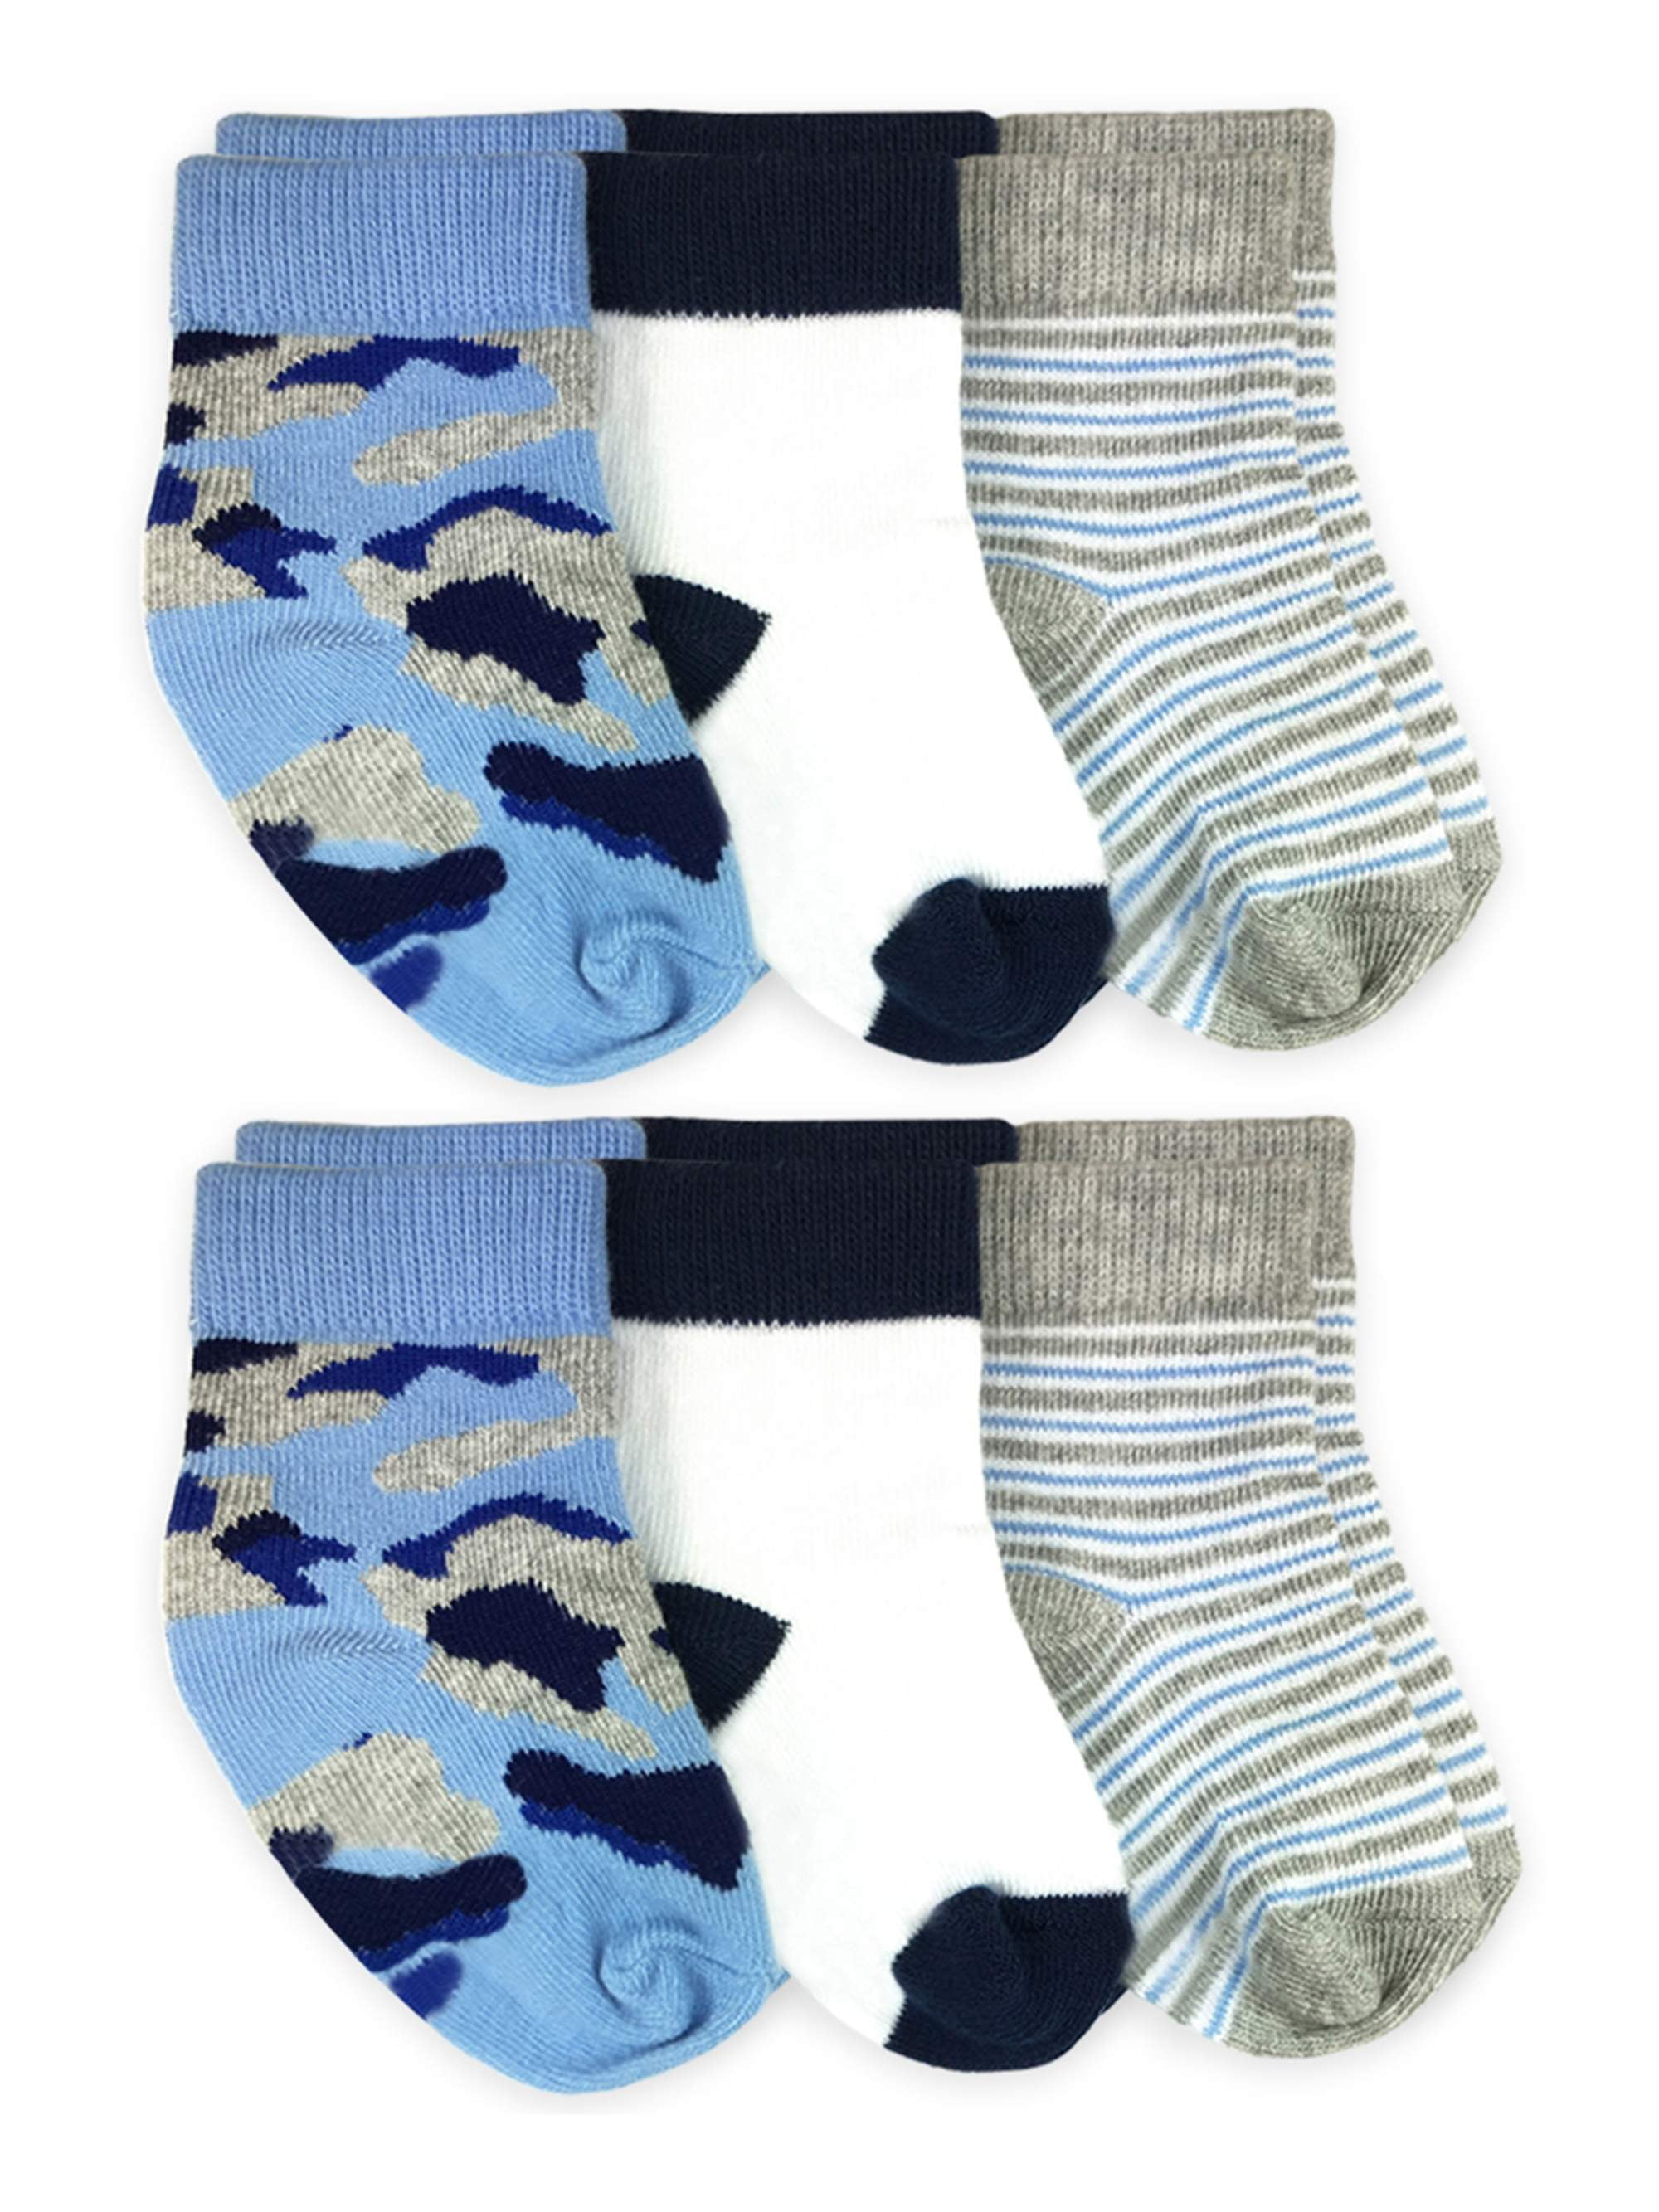 Jefferies Socks Baby Boys Camo/Stripe/Solid Color Crew Socks, 6-Pack ...